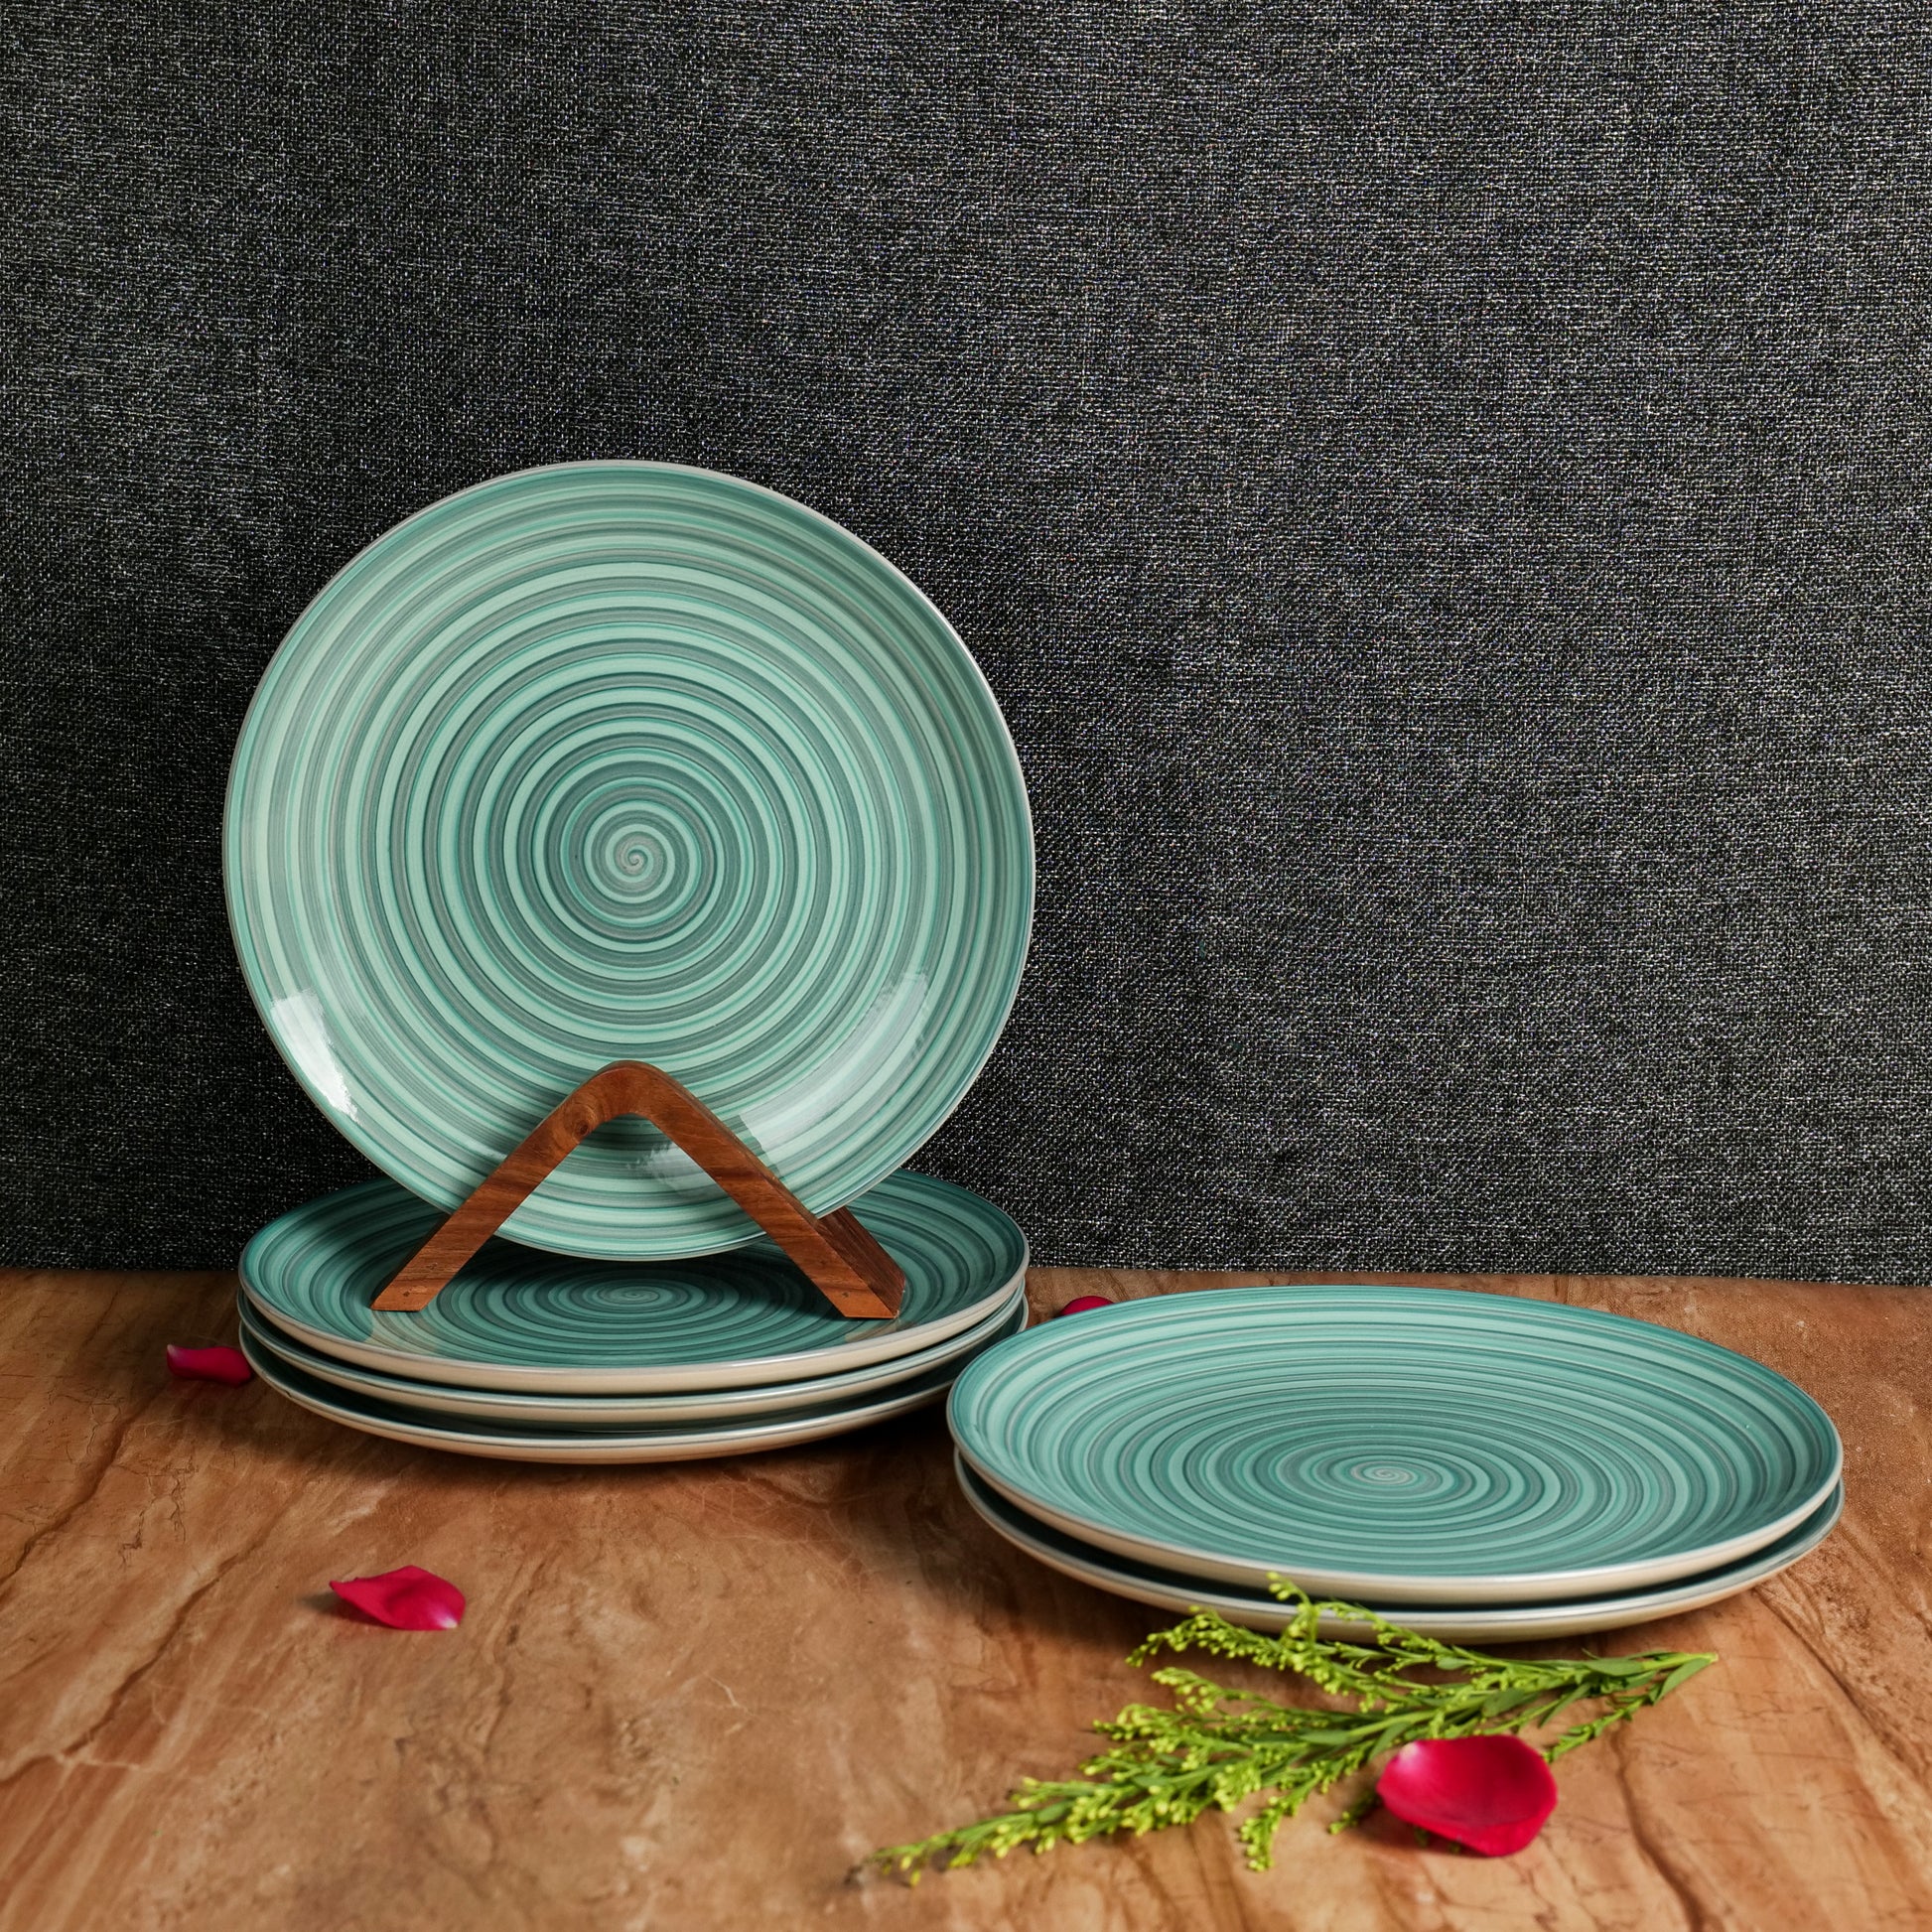 'Sea Swirls' Studio Pottery Ceramic Dinner Plates, 10 Inch